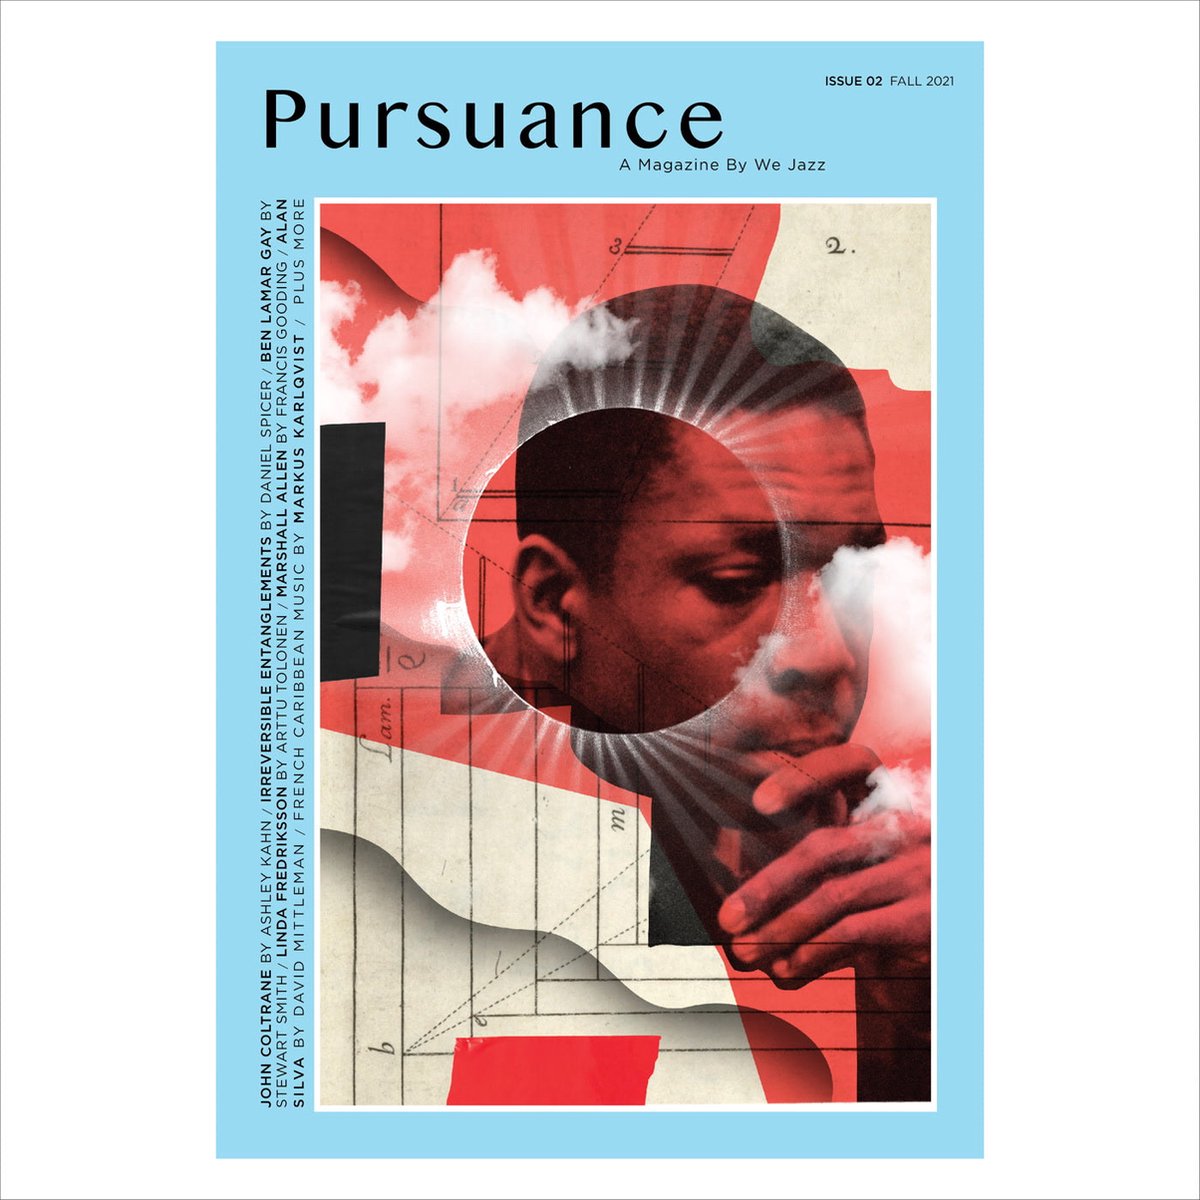 We Jazz Magazine - Pursuance